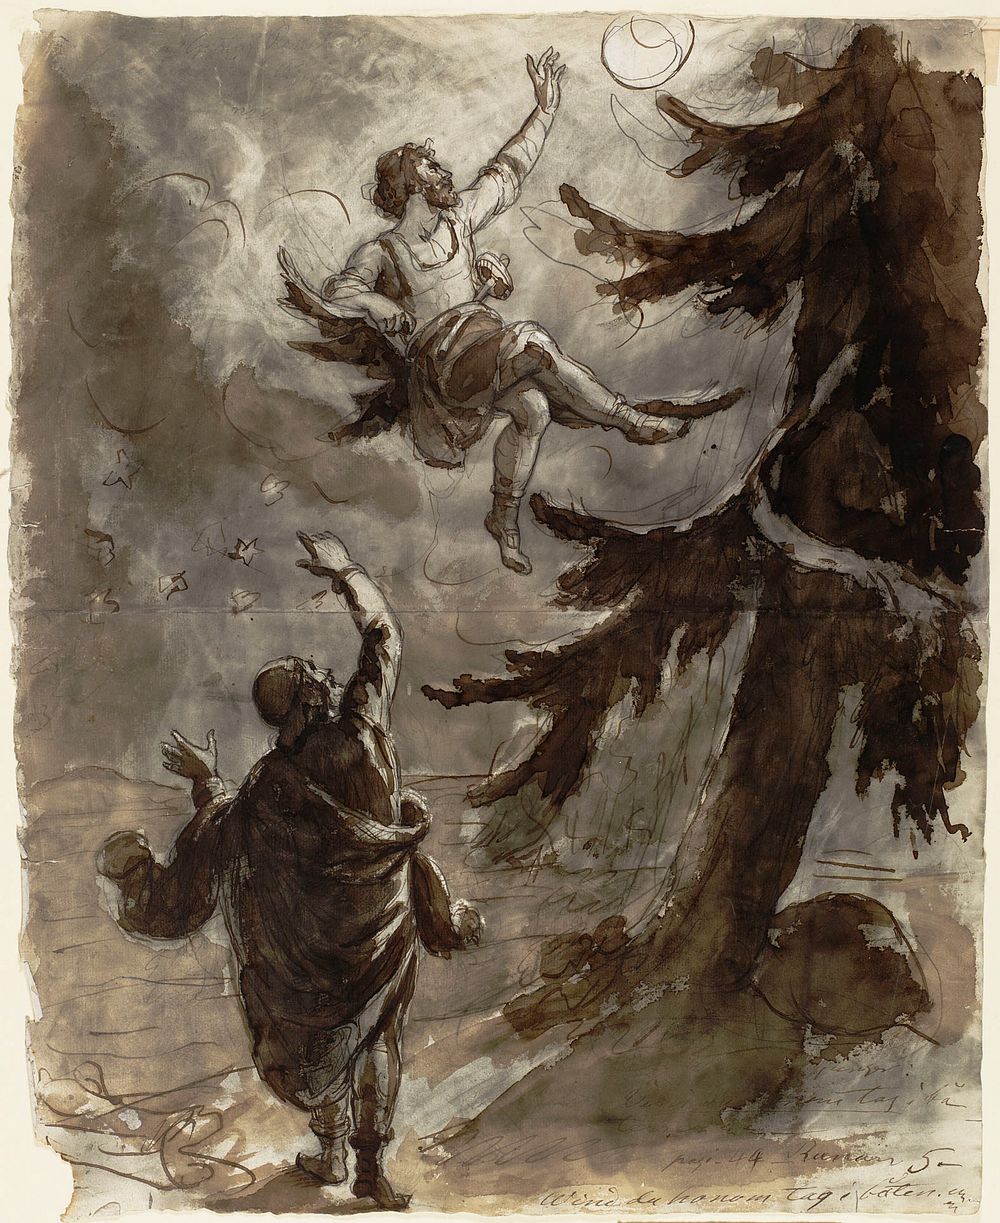 Väinämöinen sings spells. a male figure rises from the top of a spruce., by Robert Wilhelm Ekman